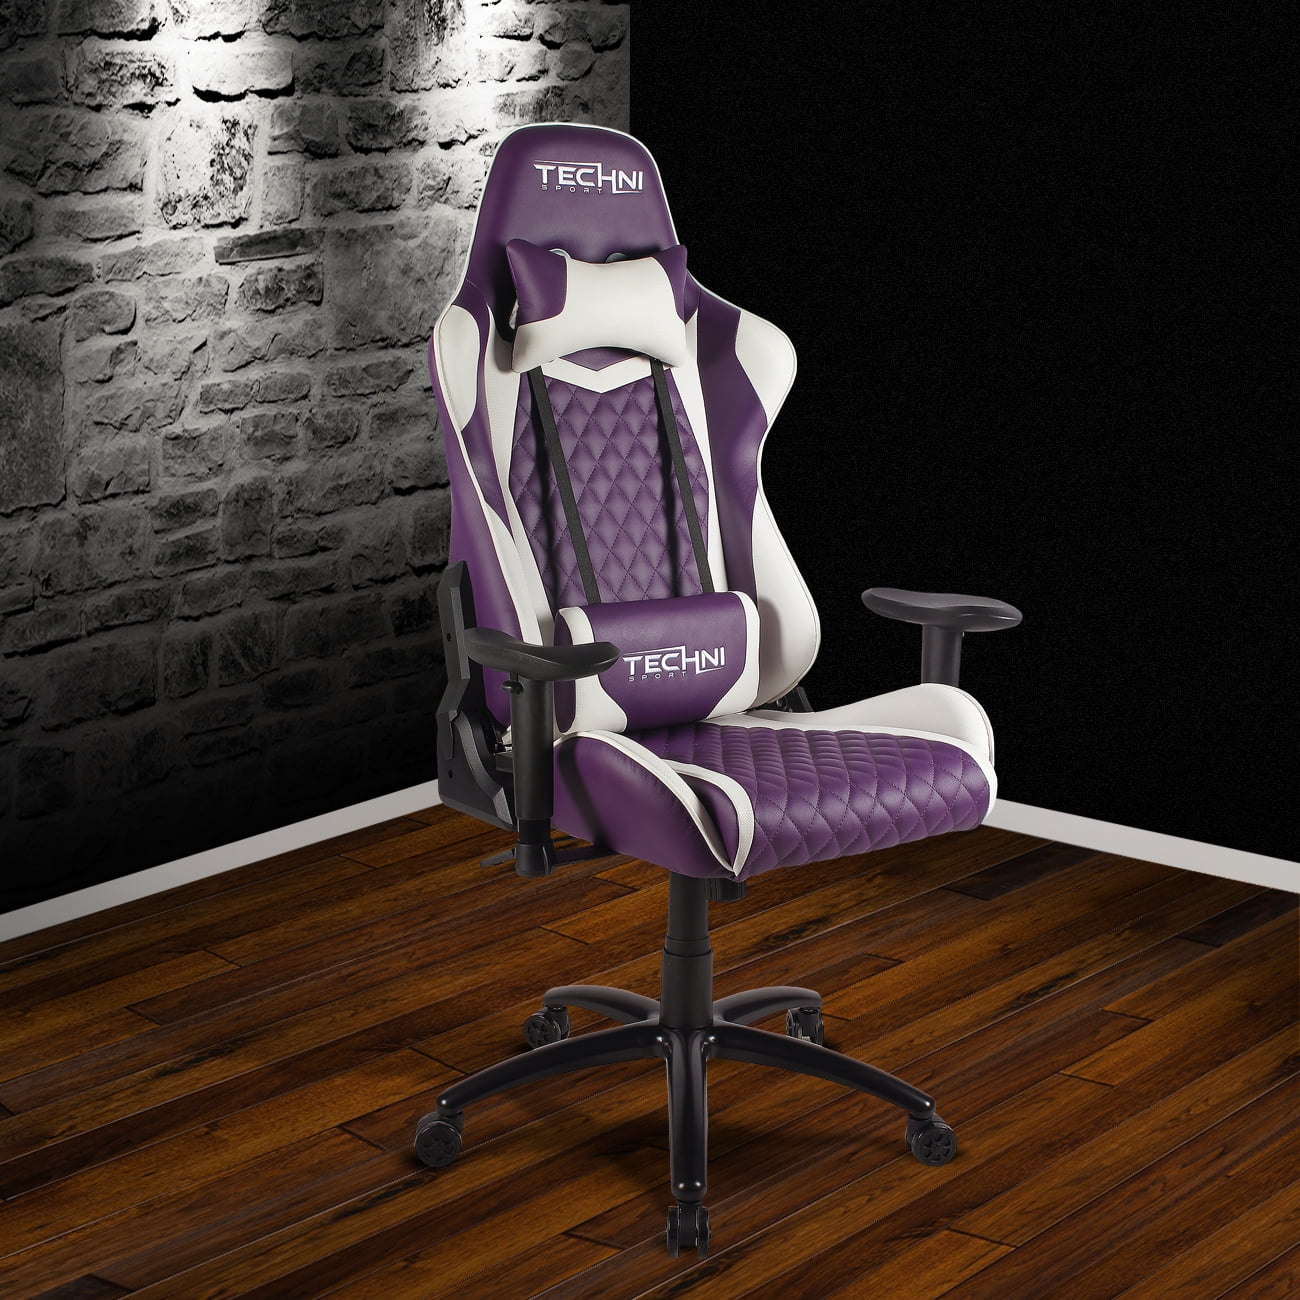 Techni Sport TS52 Ergonomic High Back Video Gaming Chair